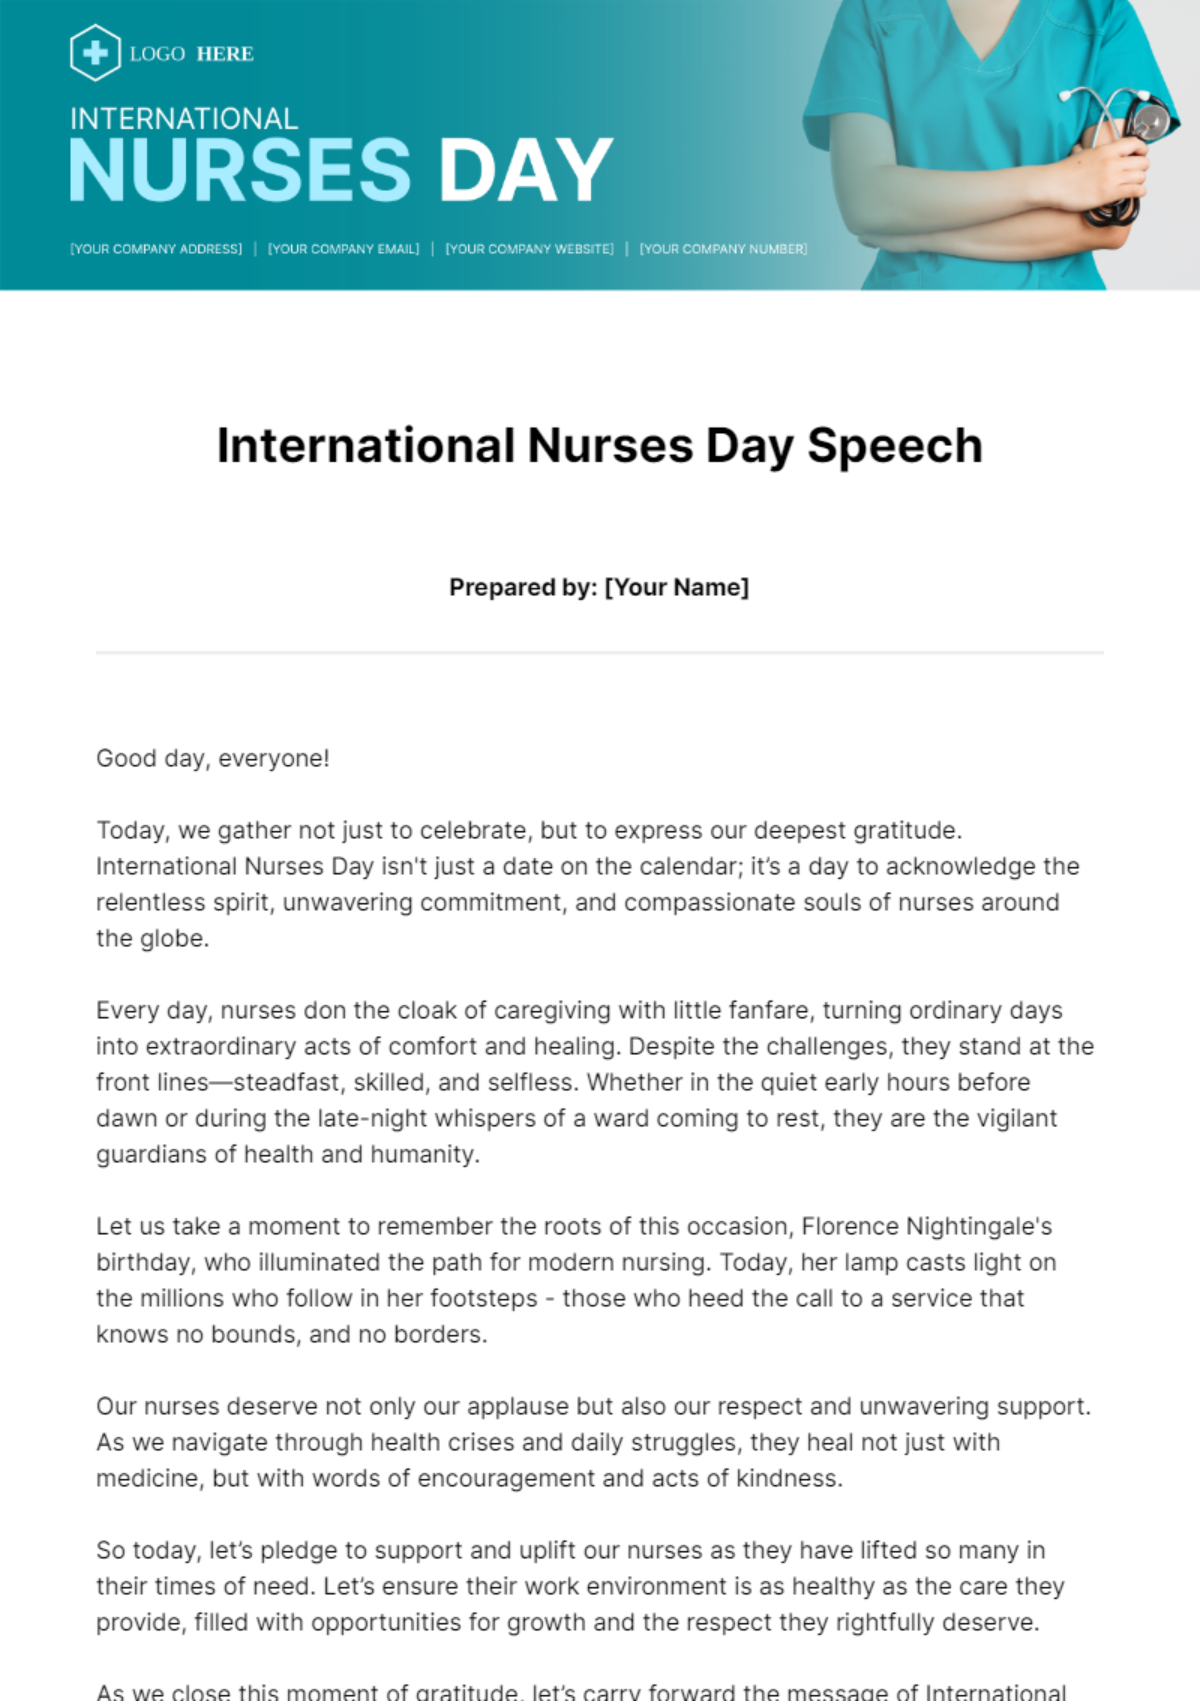 International Nurses Day Speech Template